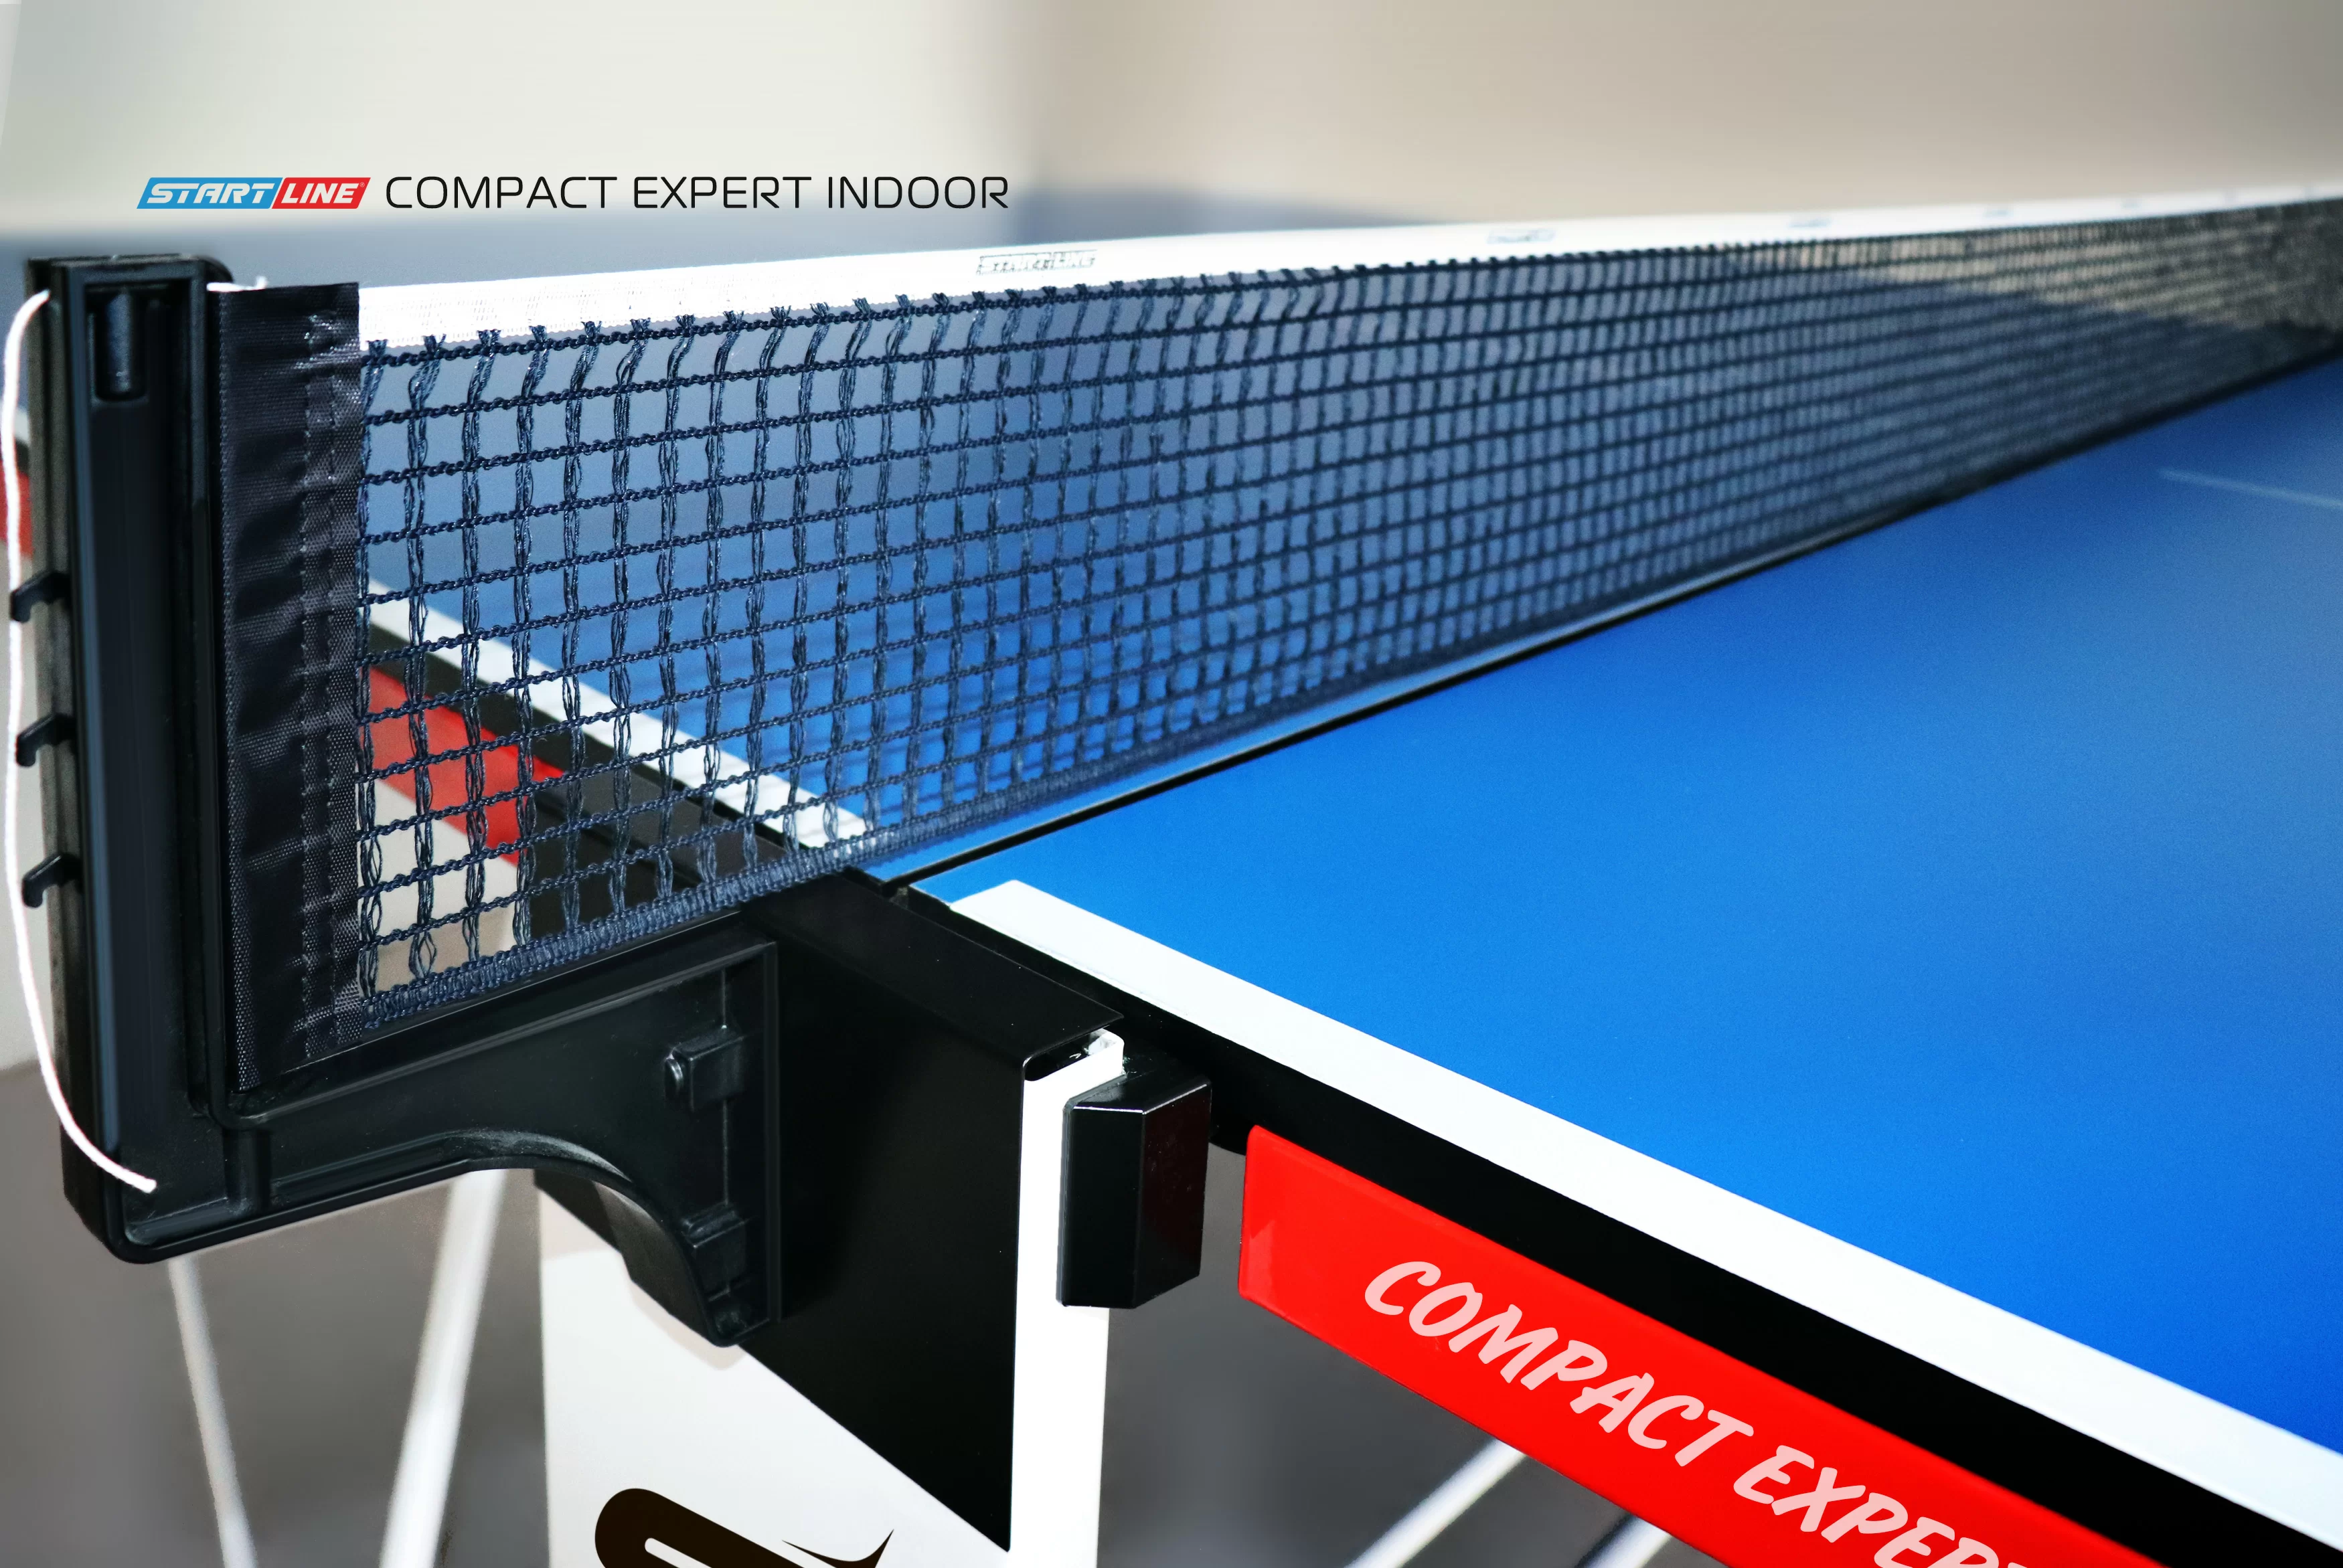 Фото Теннисный стол Start Line Compact Expert Indoor blue со склада магазина СпортЕВ